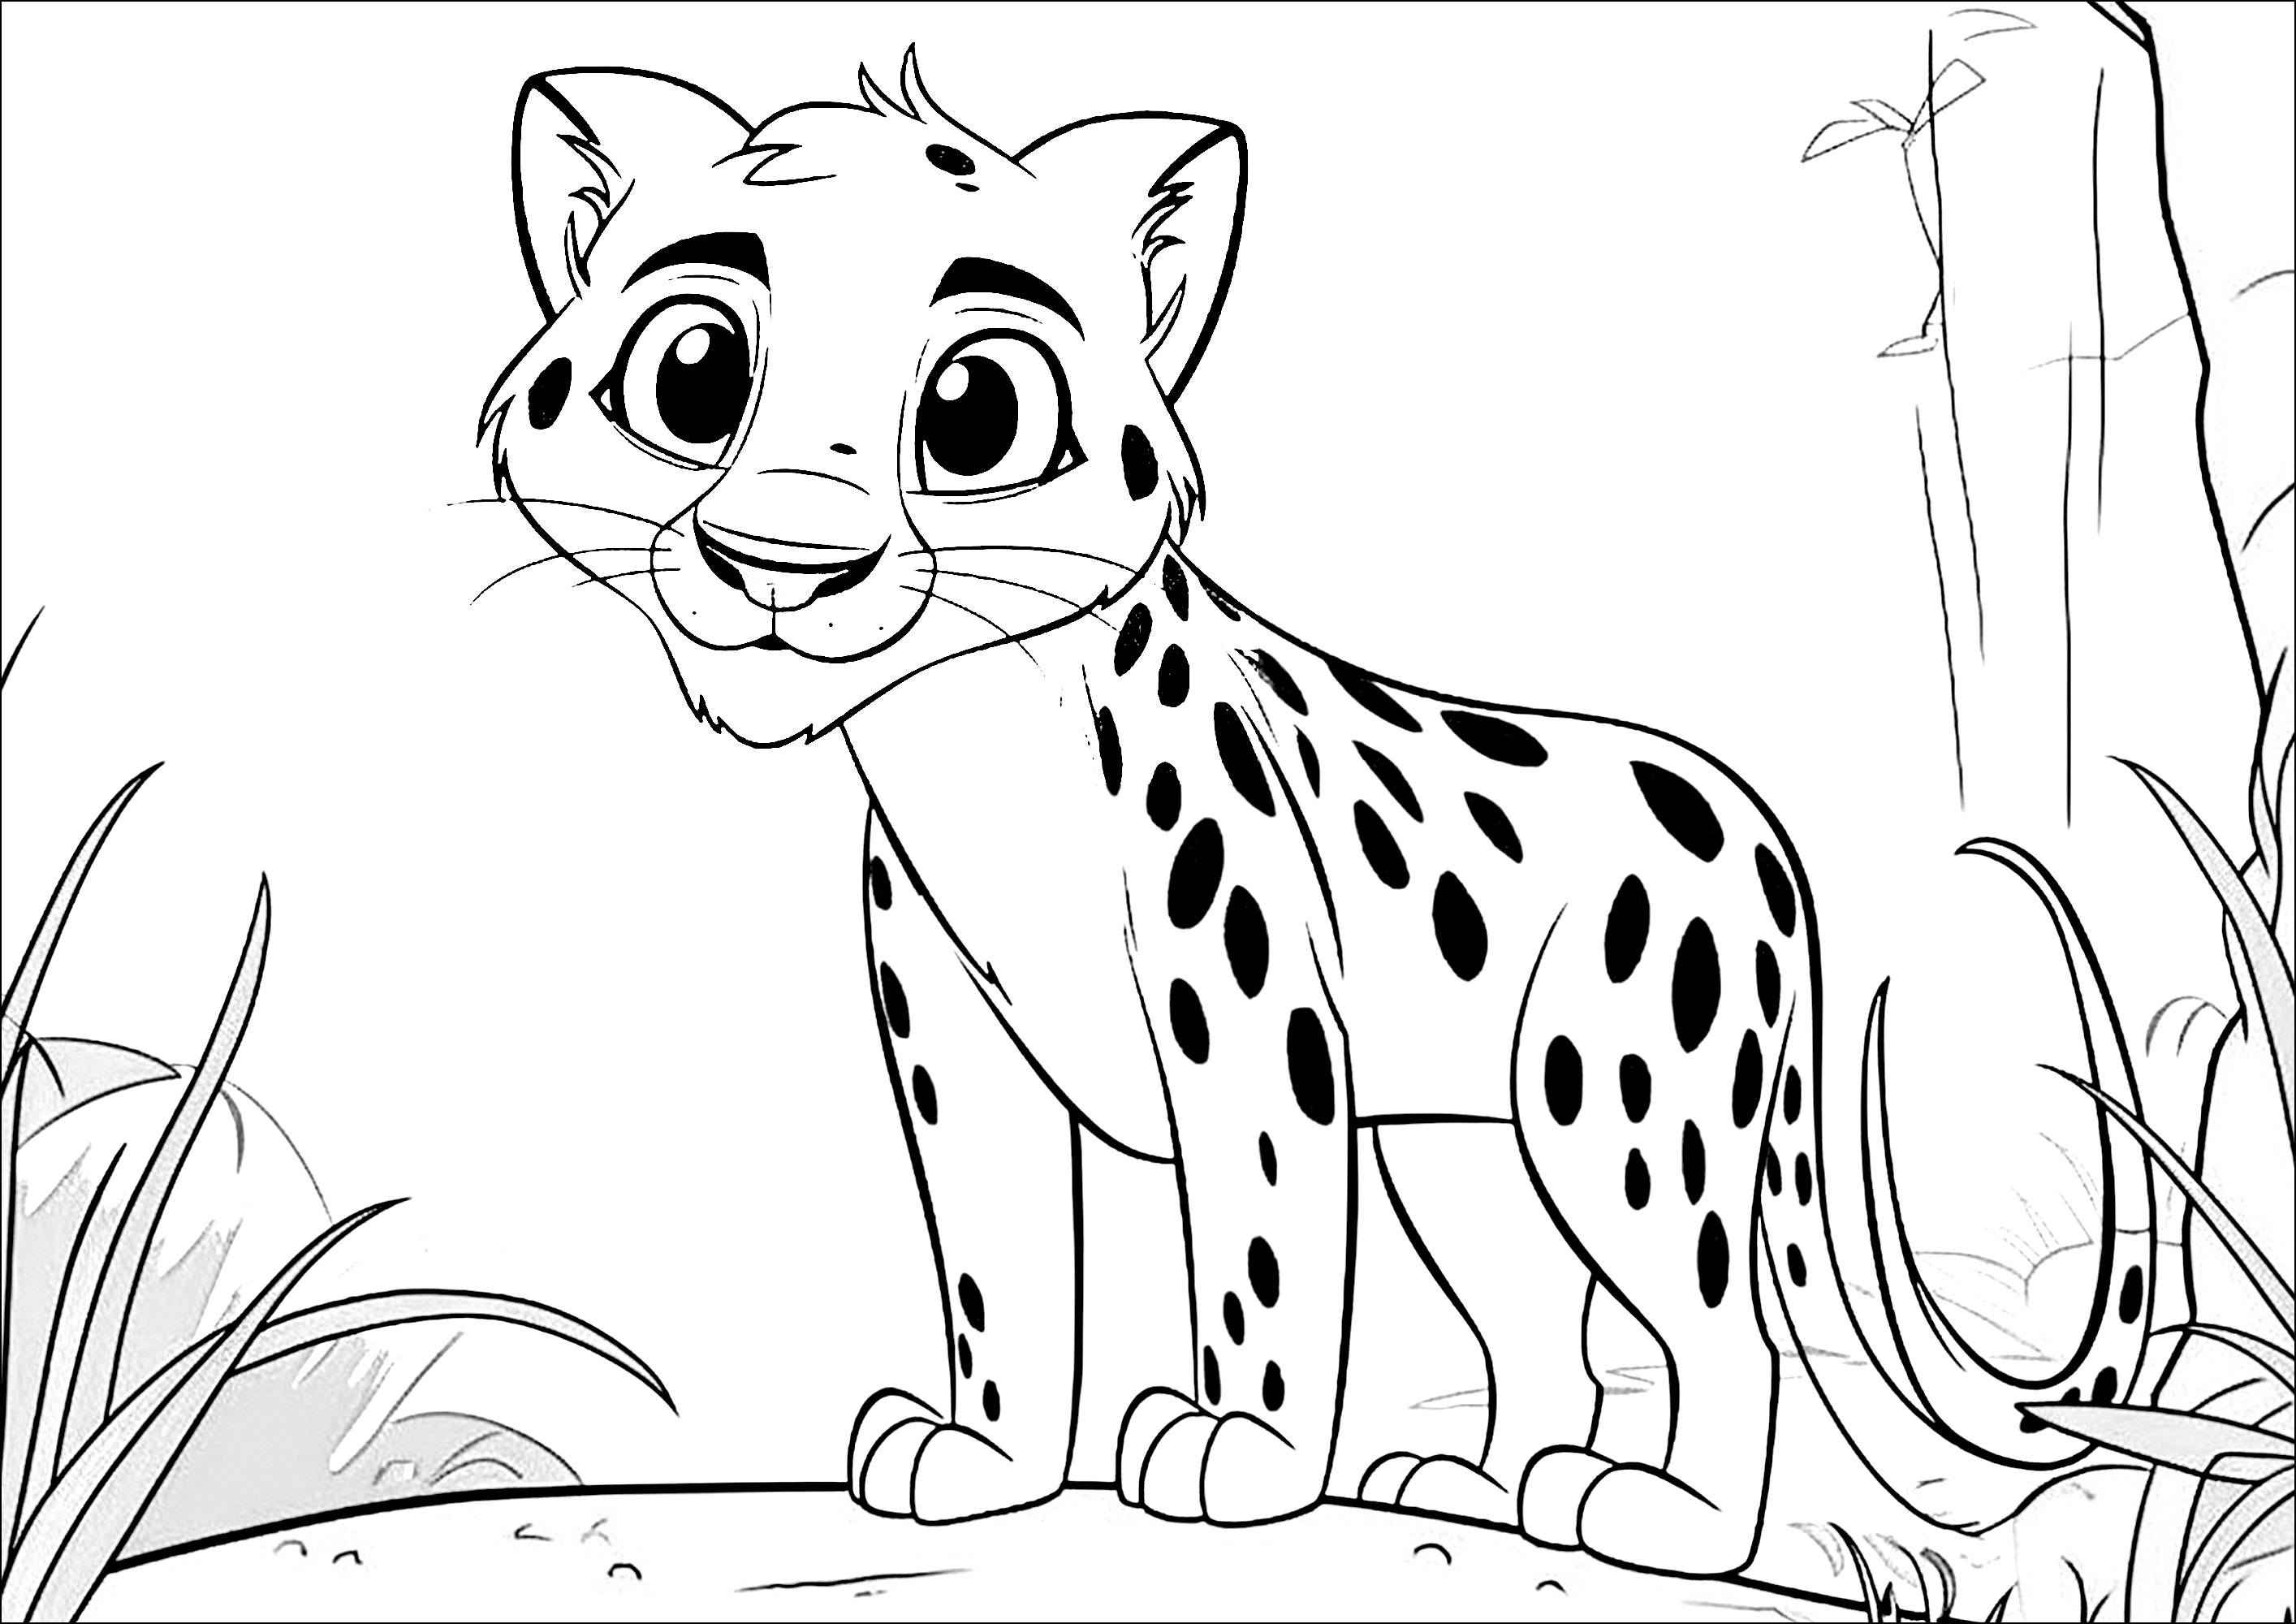 Cheetah coloring pages. Simple coloring, Disney / Pixar style